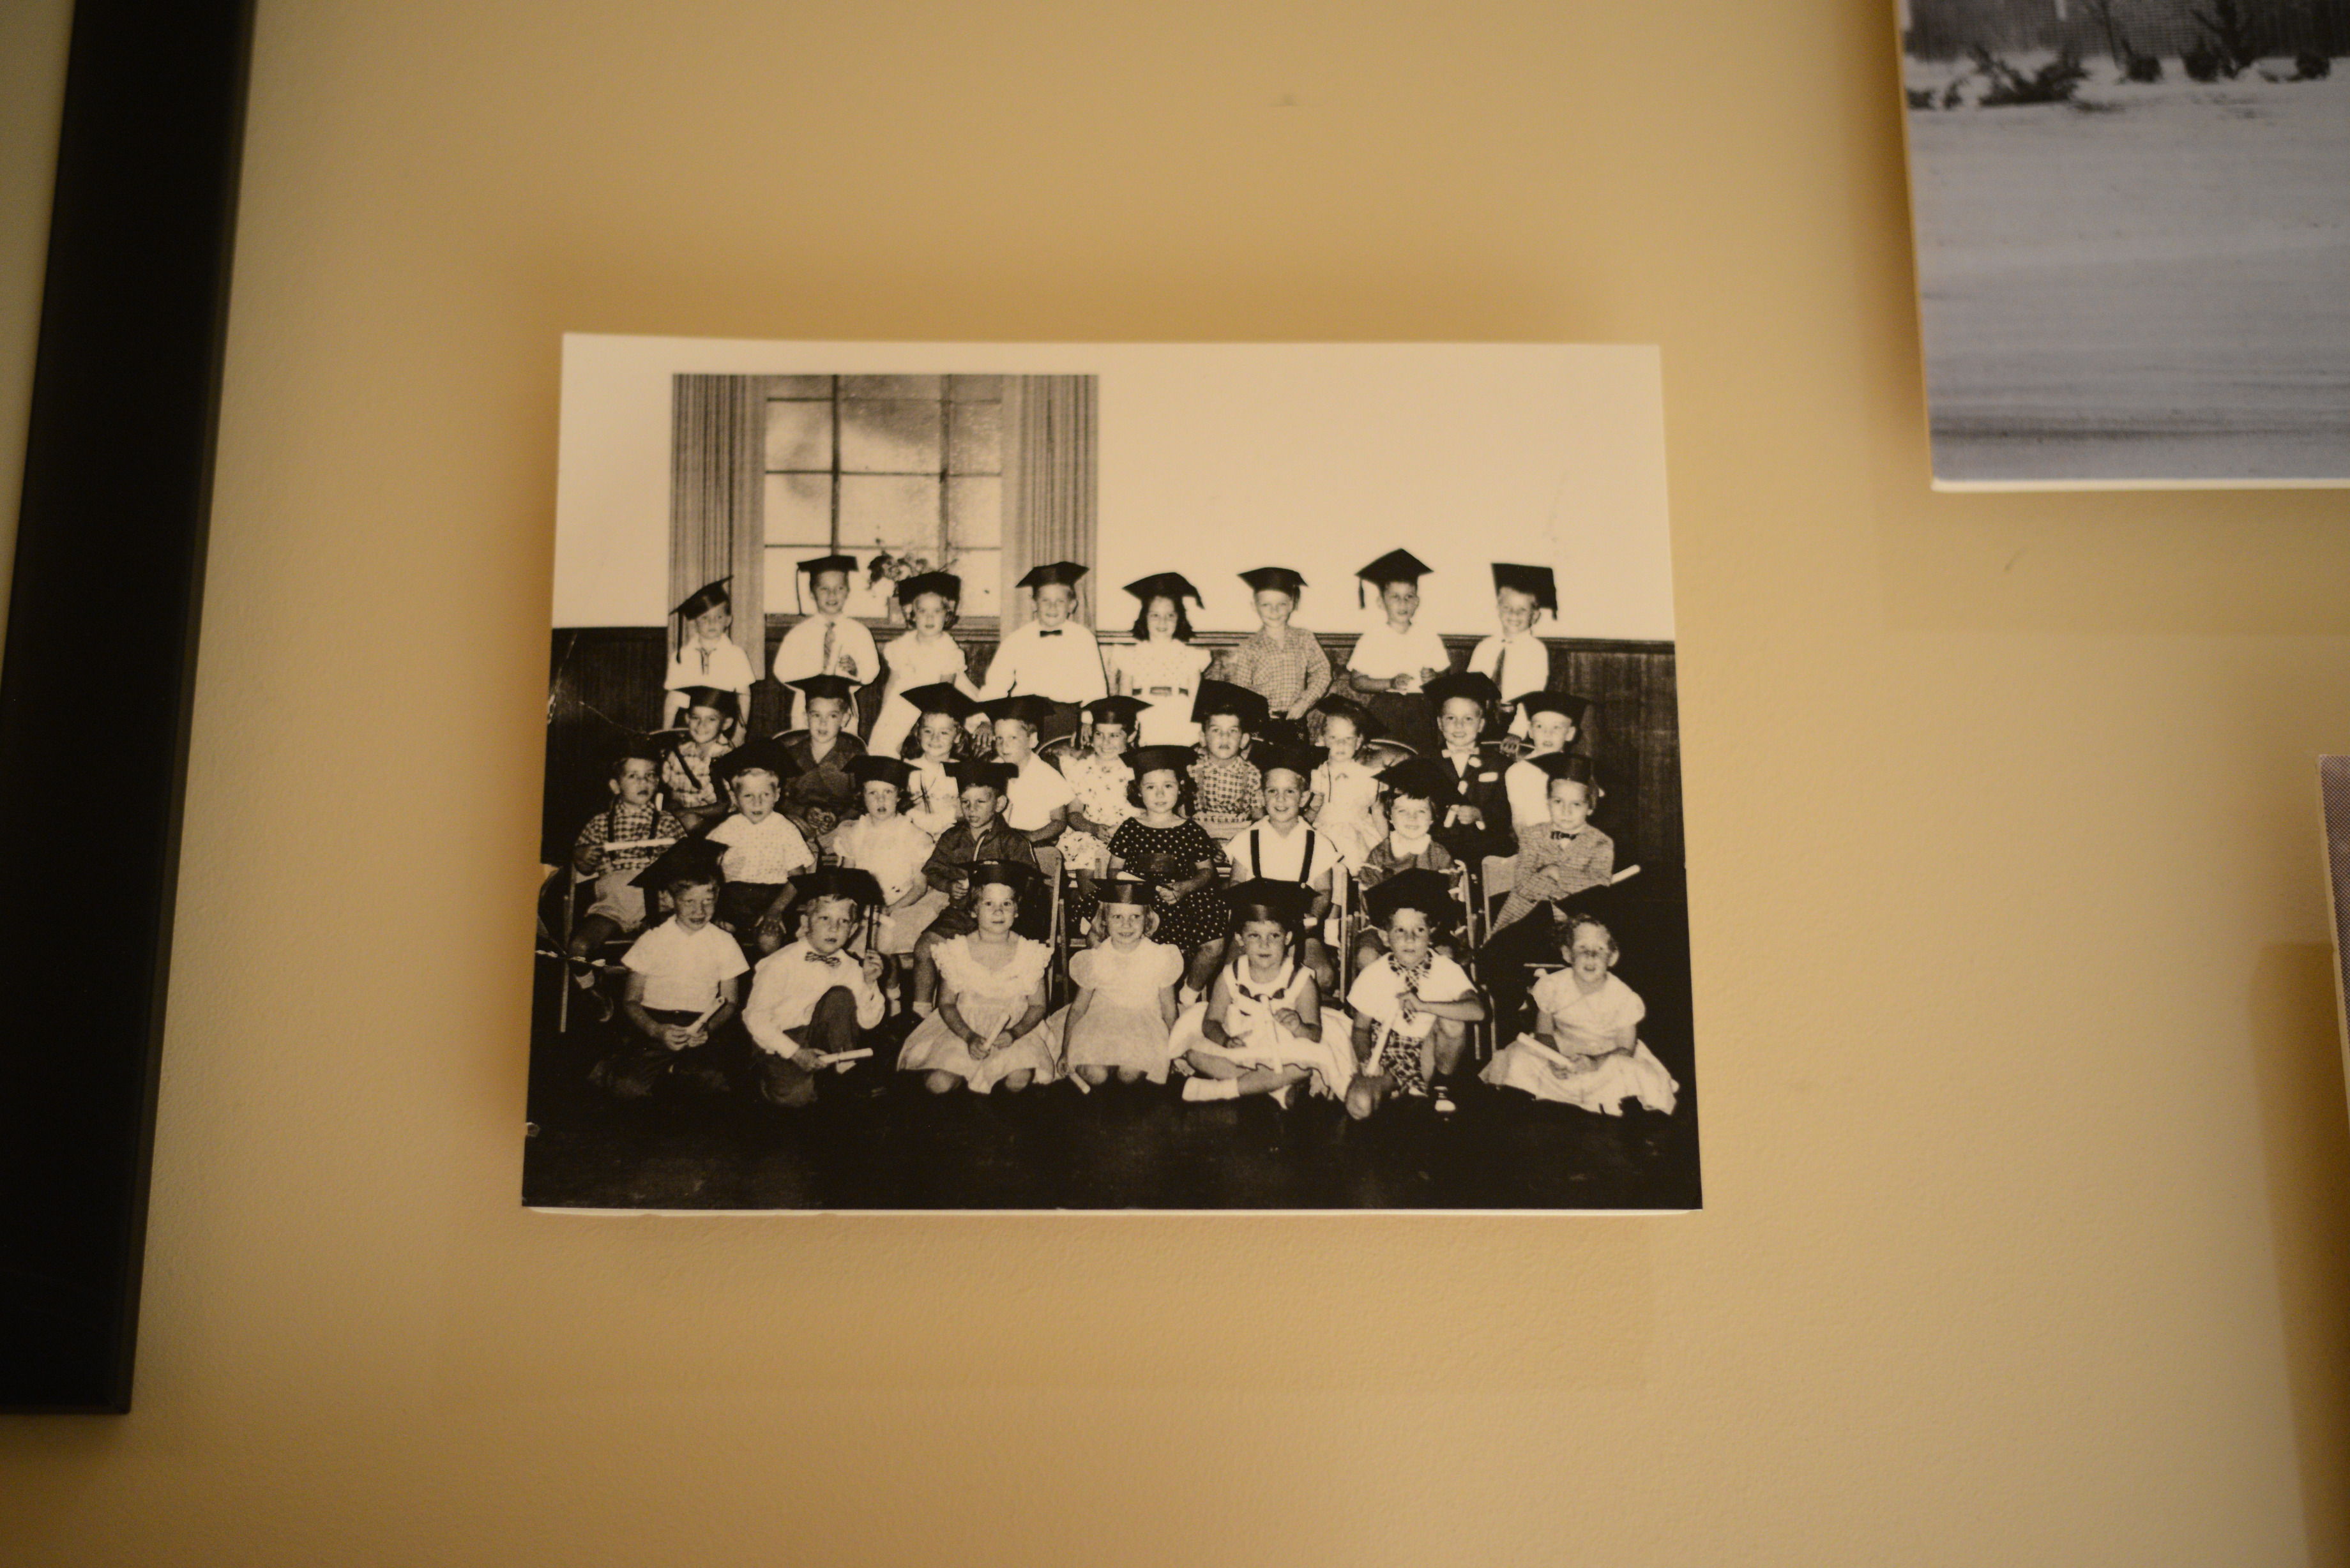 Photograph of children's graduation